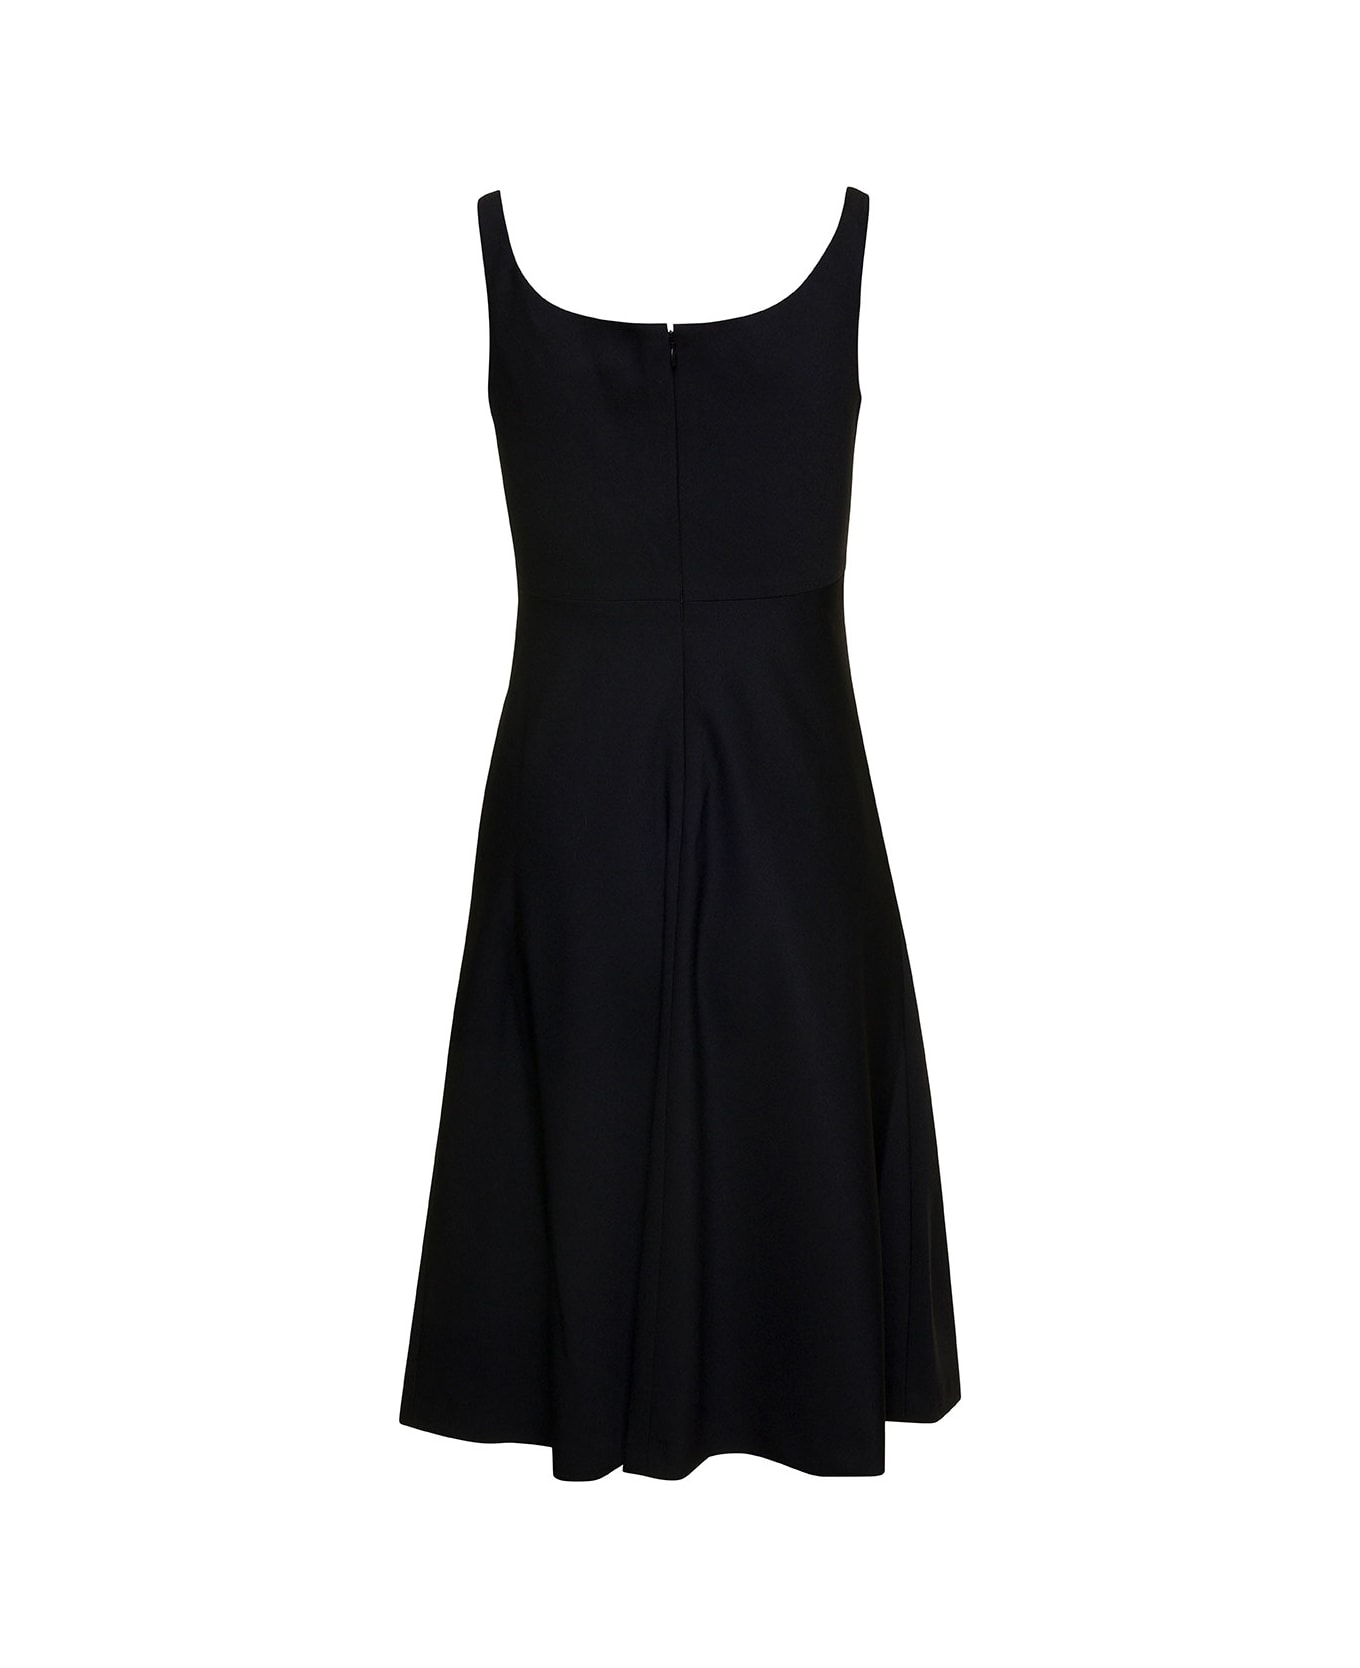 Theory Mini Black Flared Dress With U Neckline In Wool Blend Woman - Black